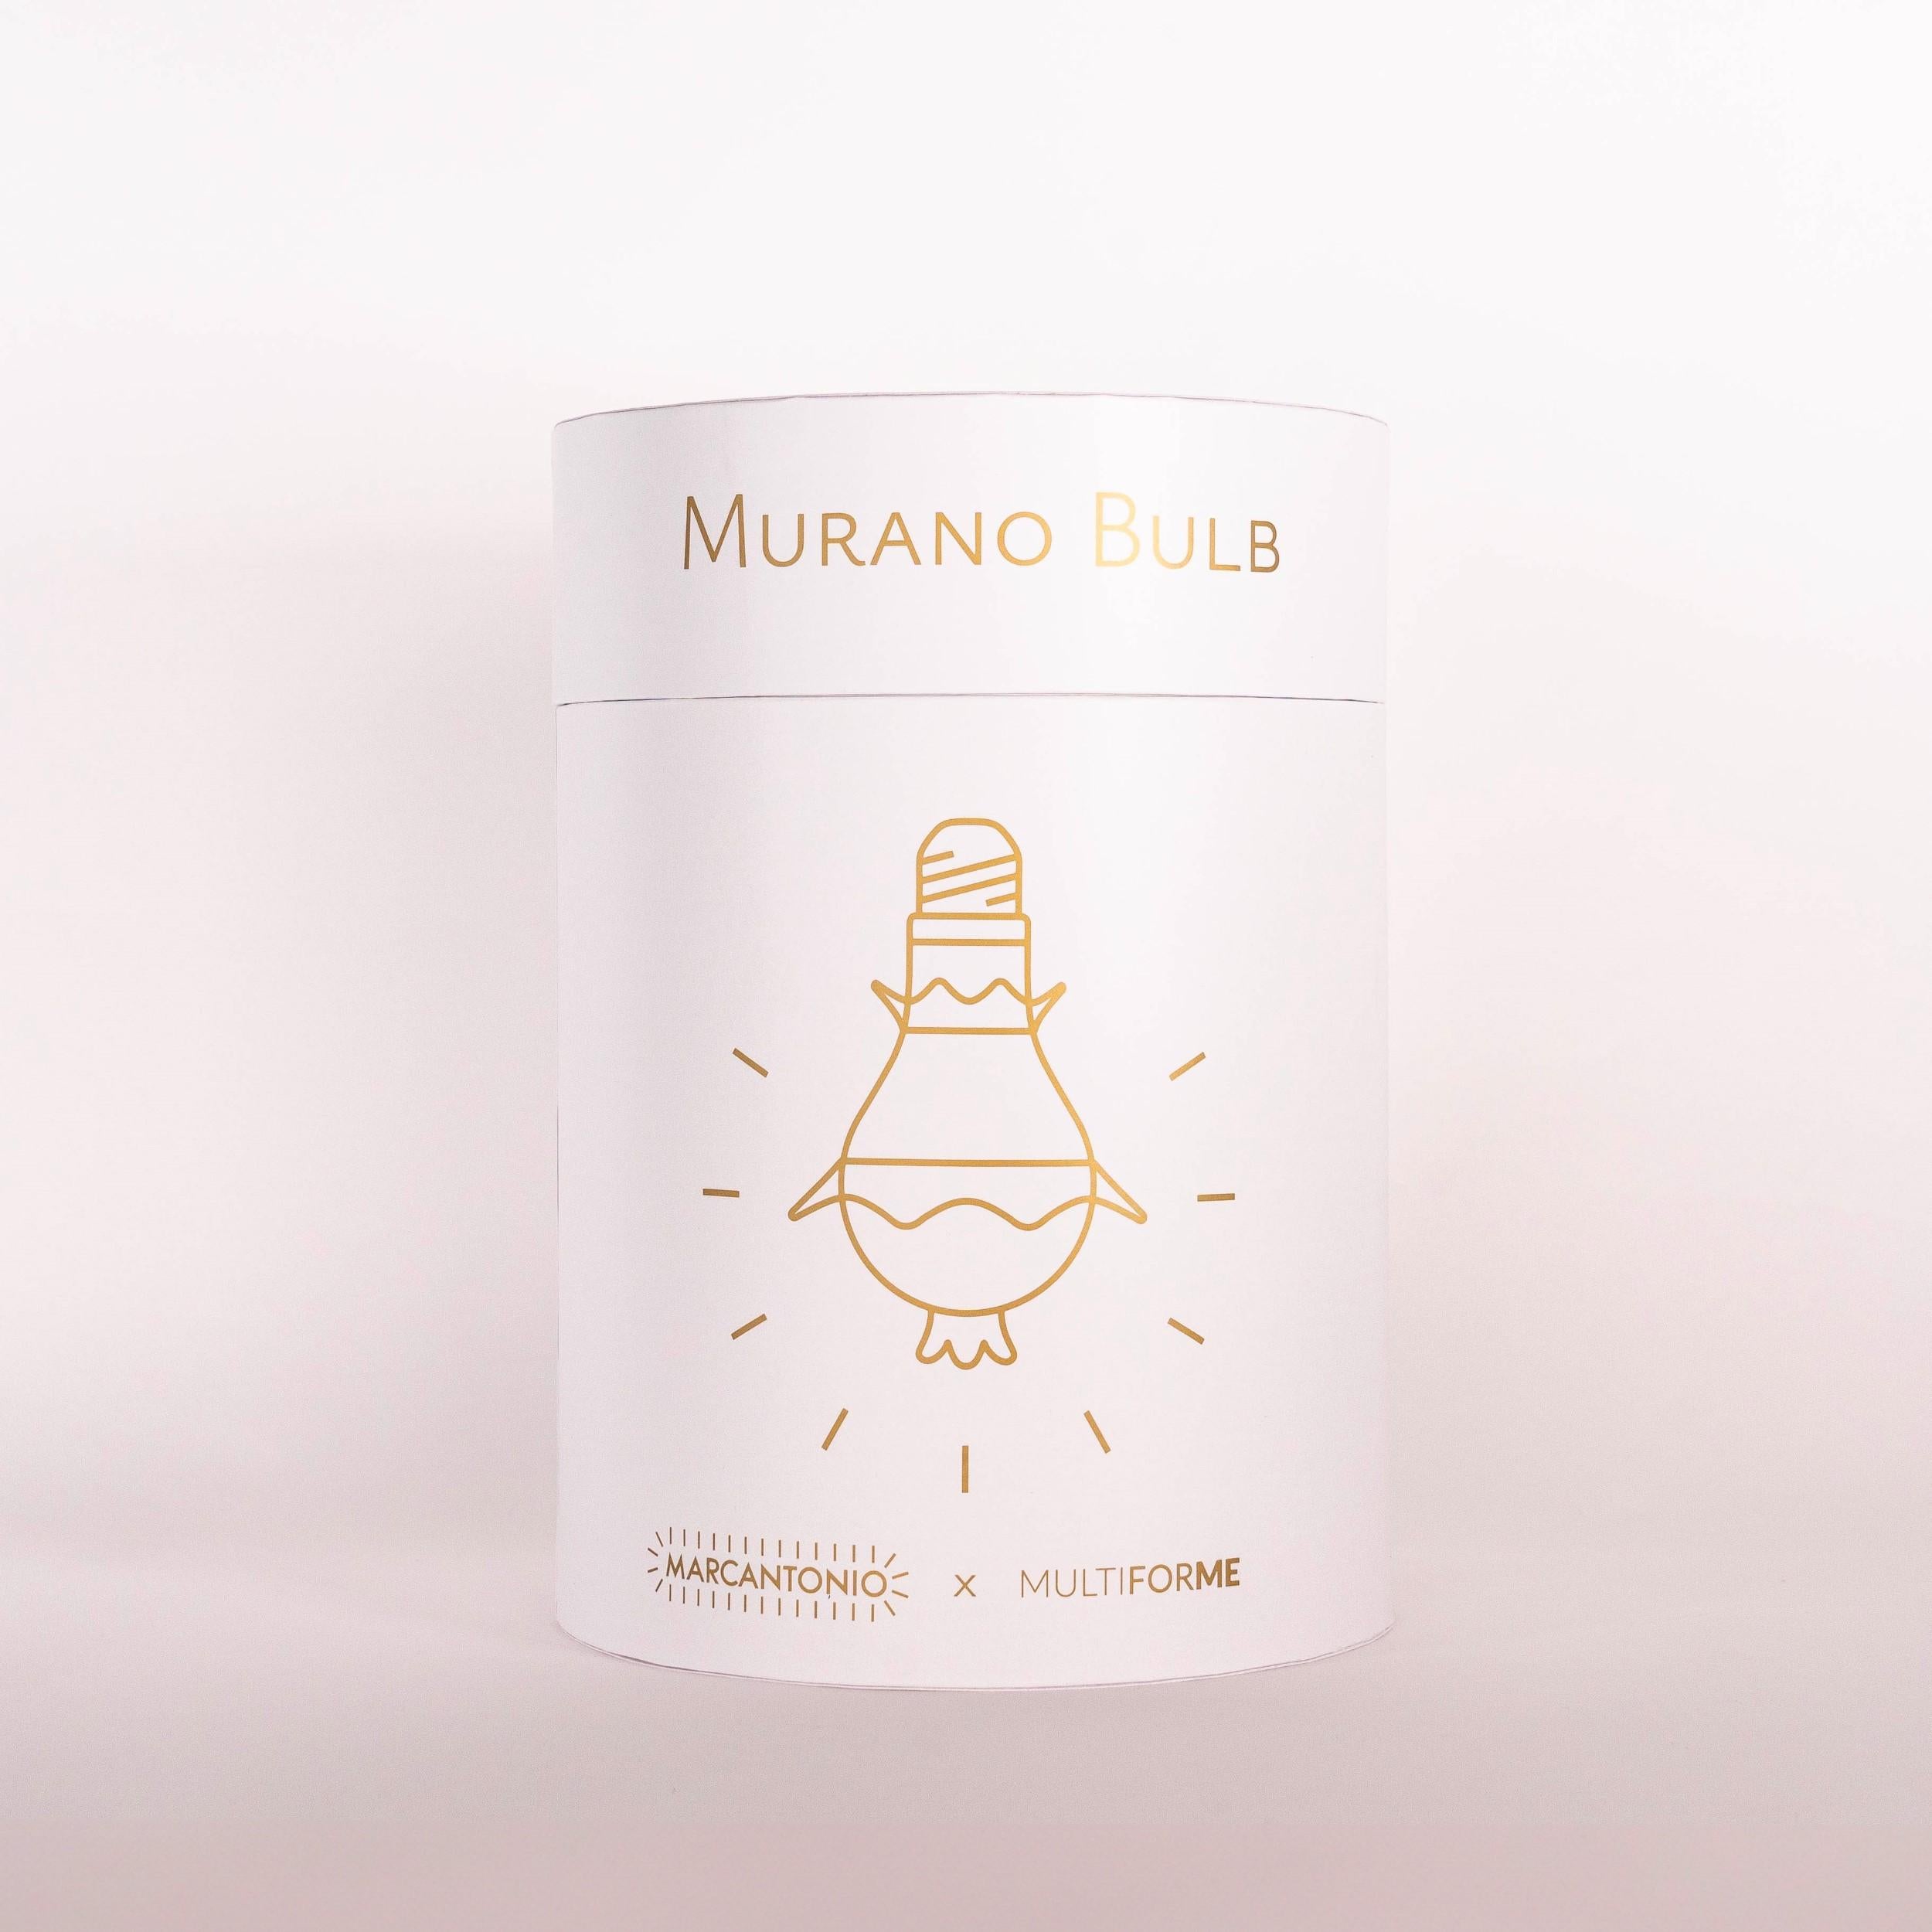 Artistic glass lightbulb chandelier Murano Bulb Marcantonio X Multiforme #09 For Sale 4